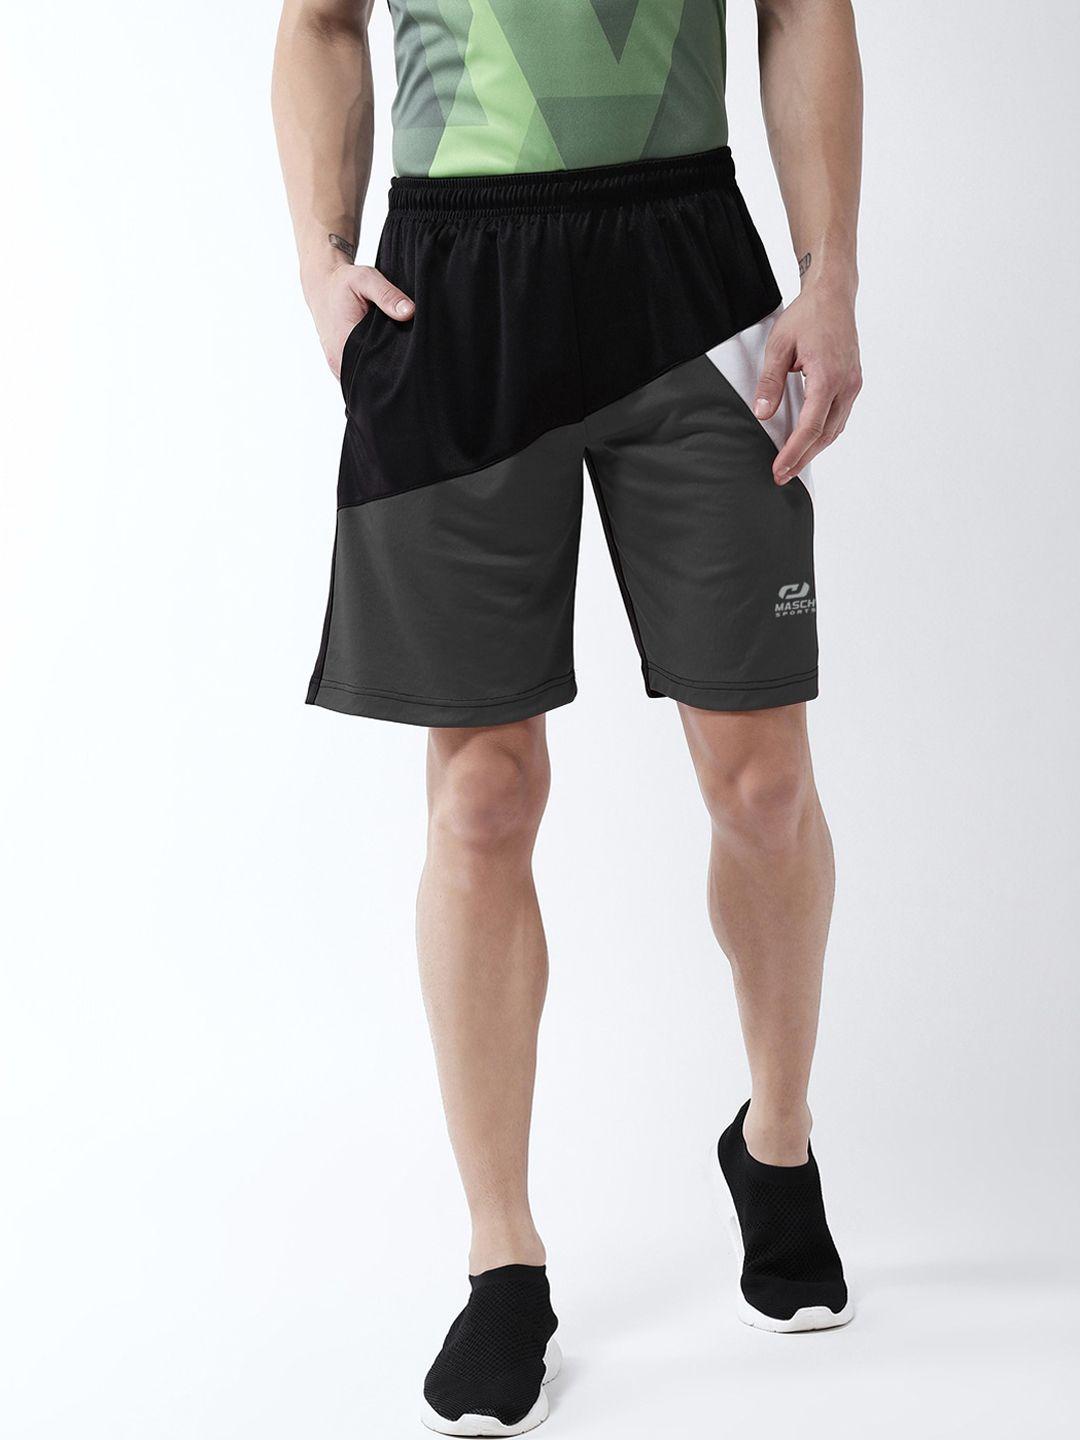 masch-sports-men-black-dry-fit-training-or-gym-sports-shorts